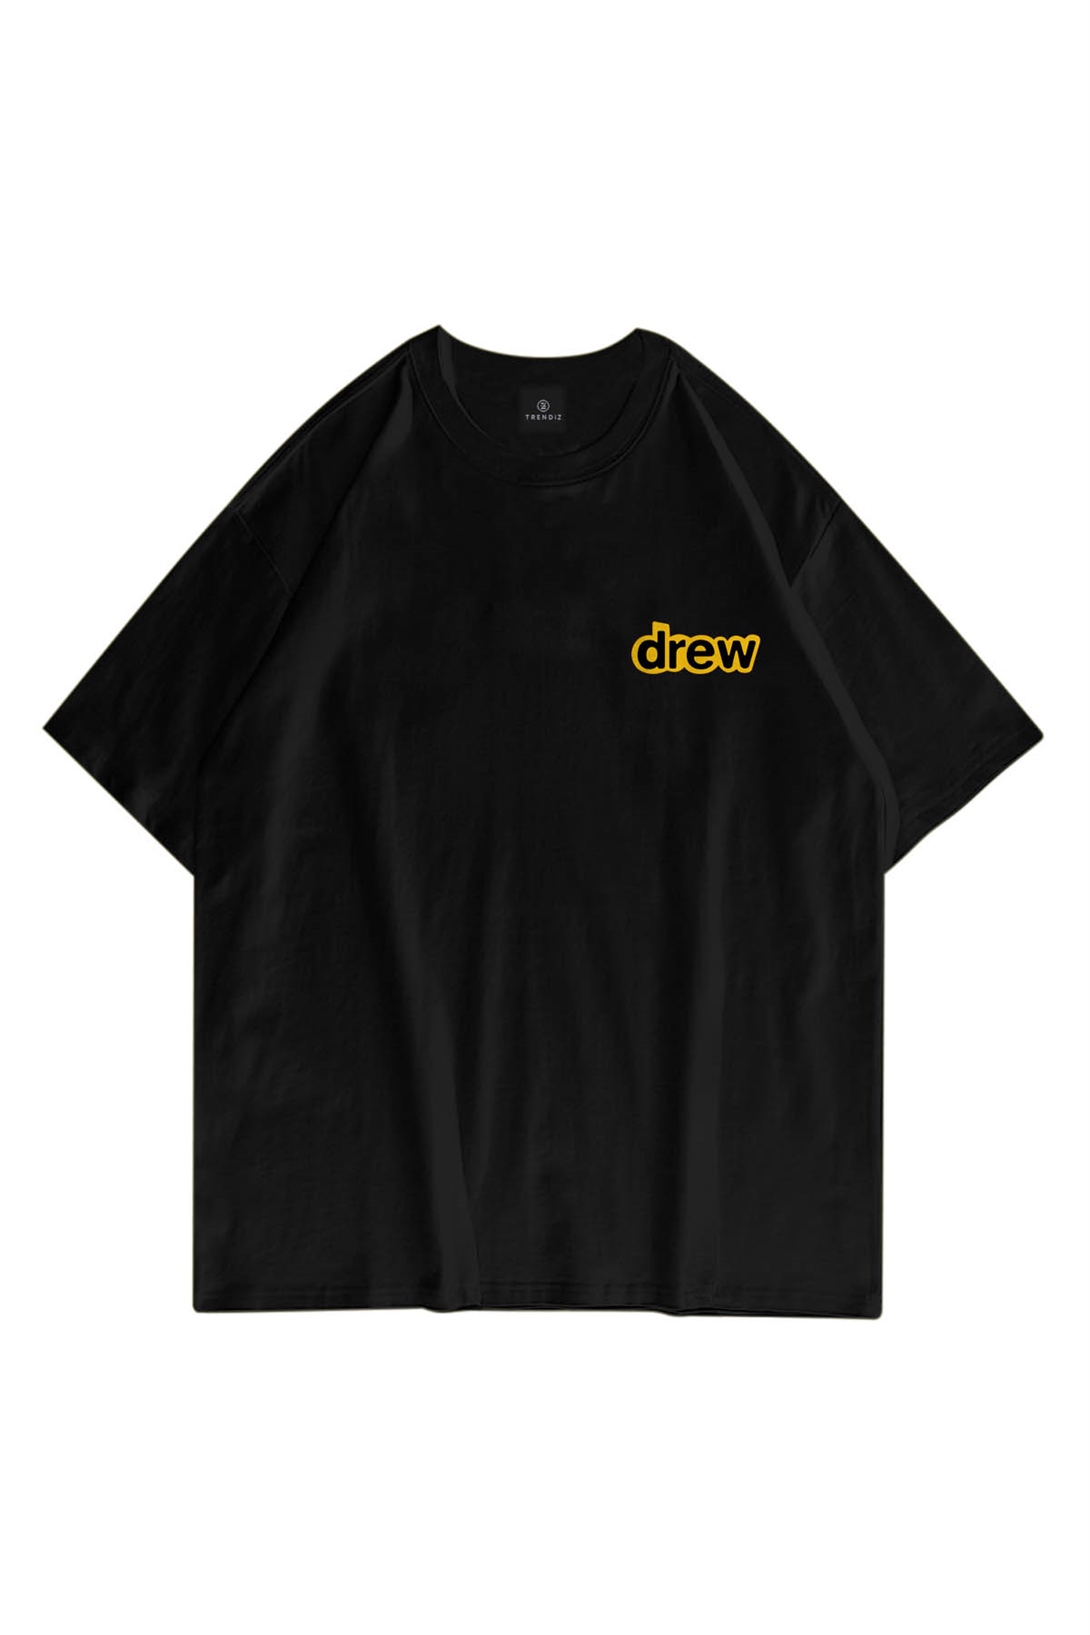 Trendiz Unisex Drew Bear Siyah Tshirt